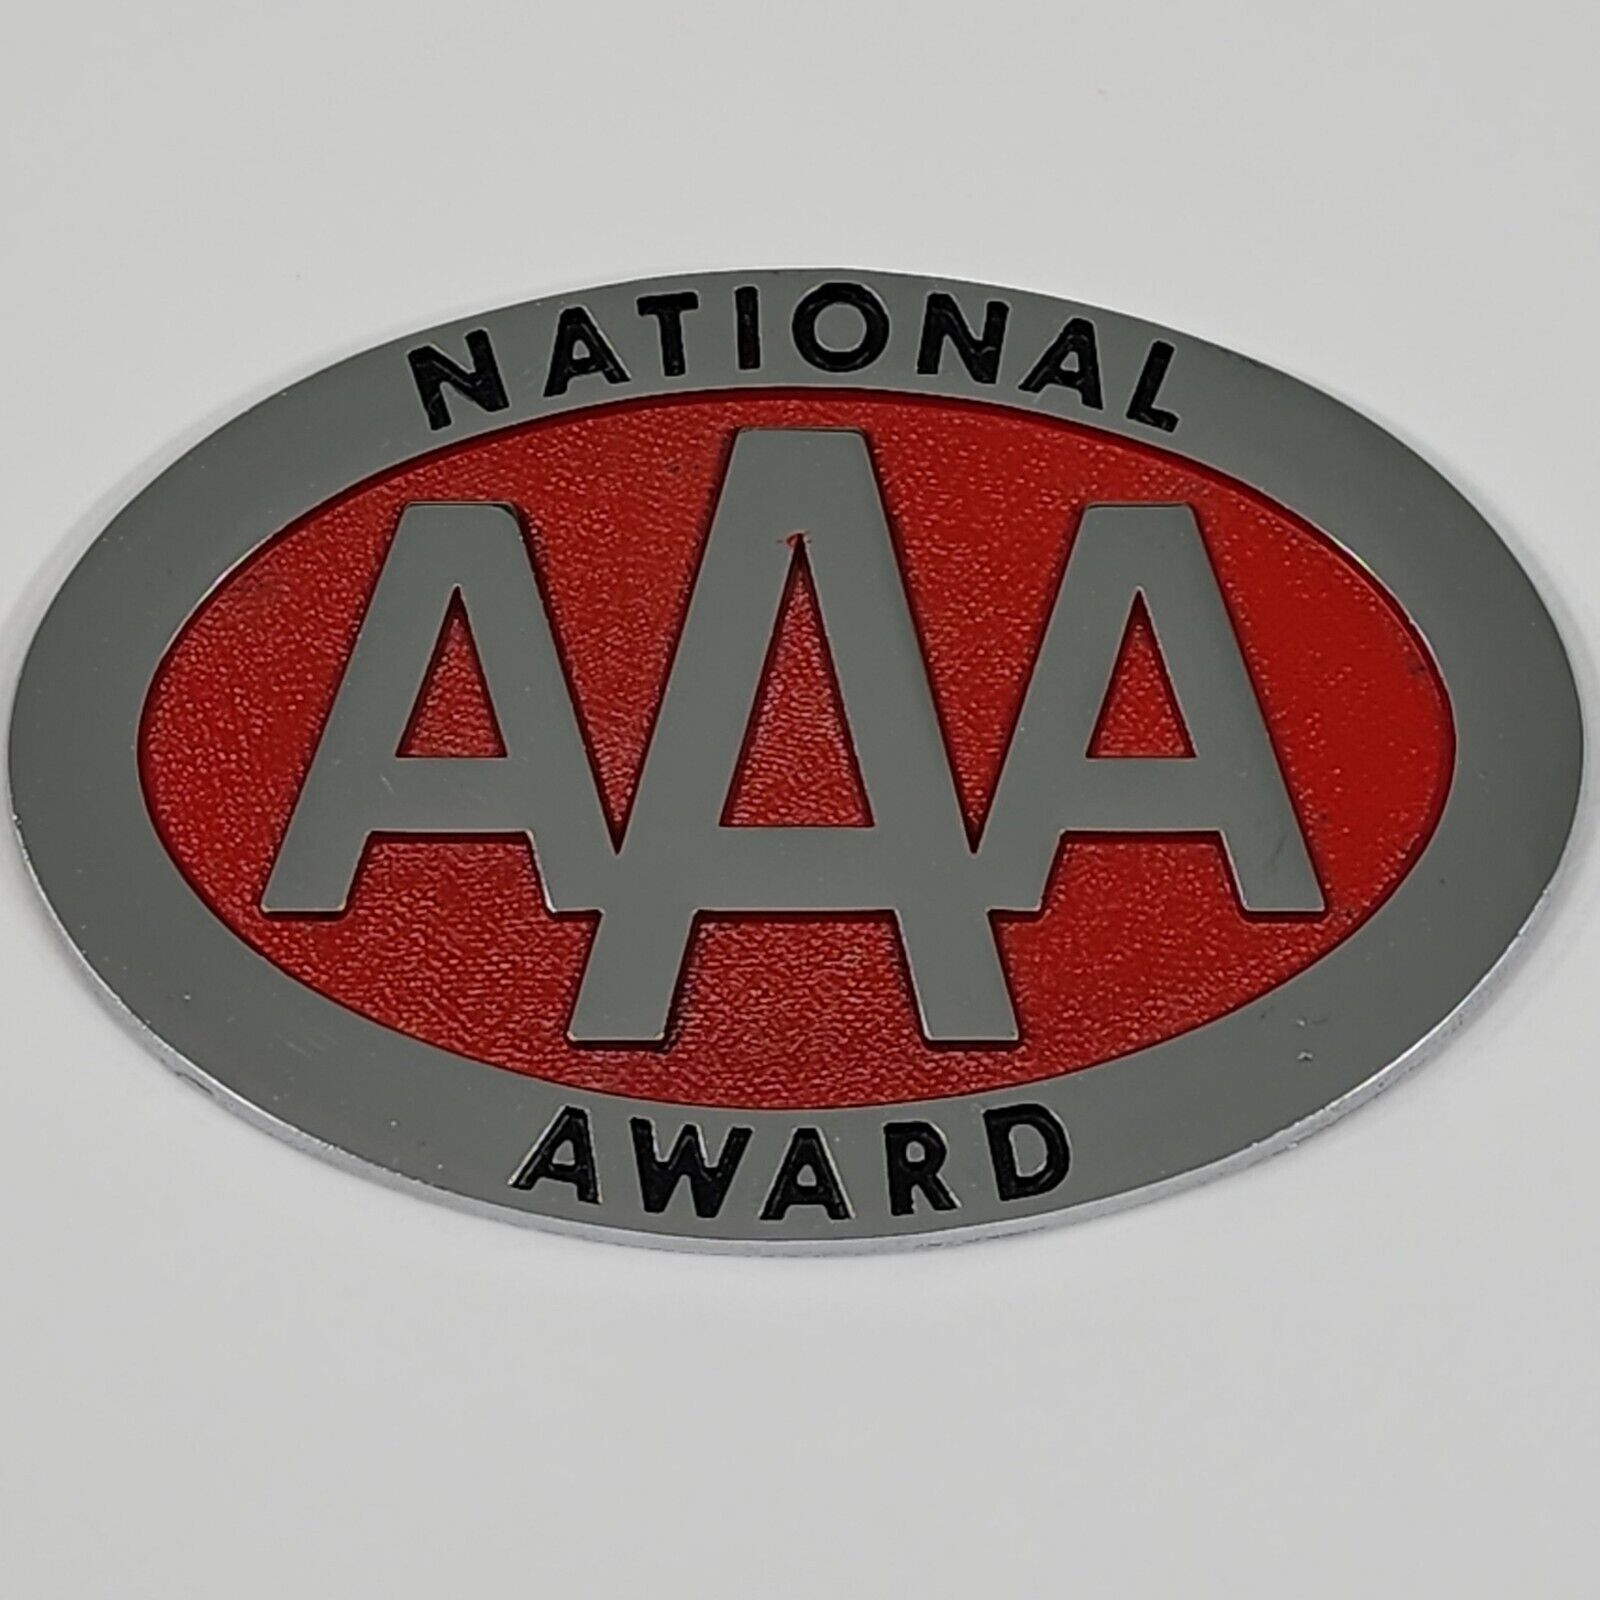 AAA National Award Metal Emblem Badge Enamel Vintage Car Accessory Plate Topper